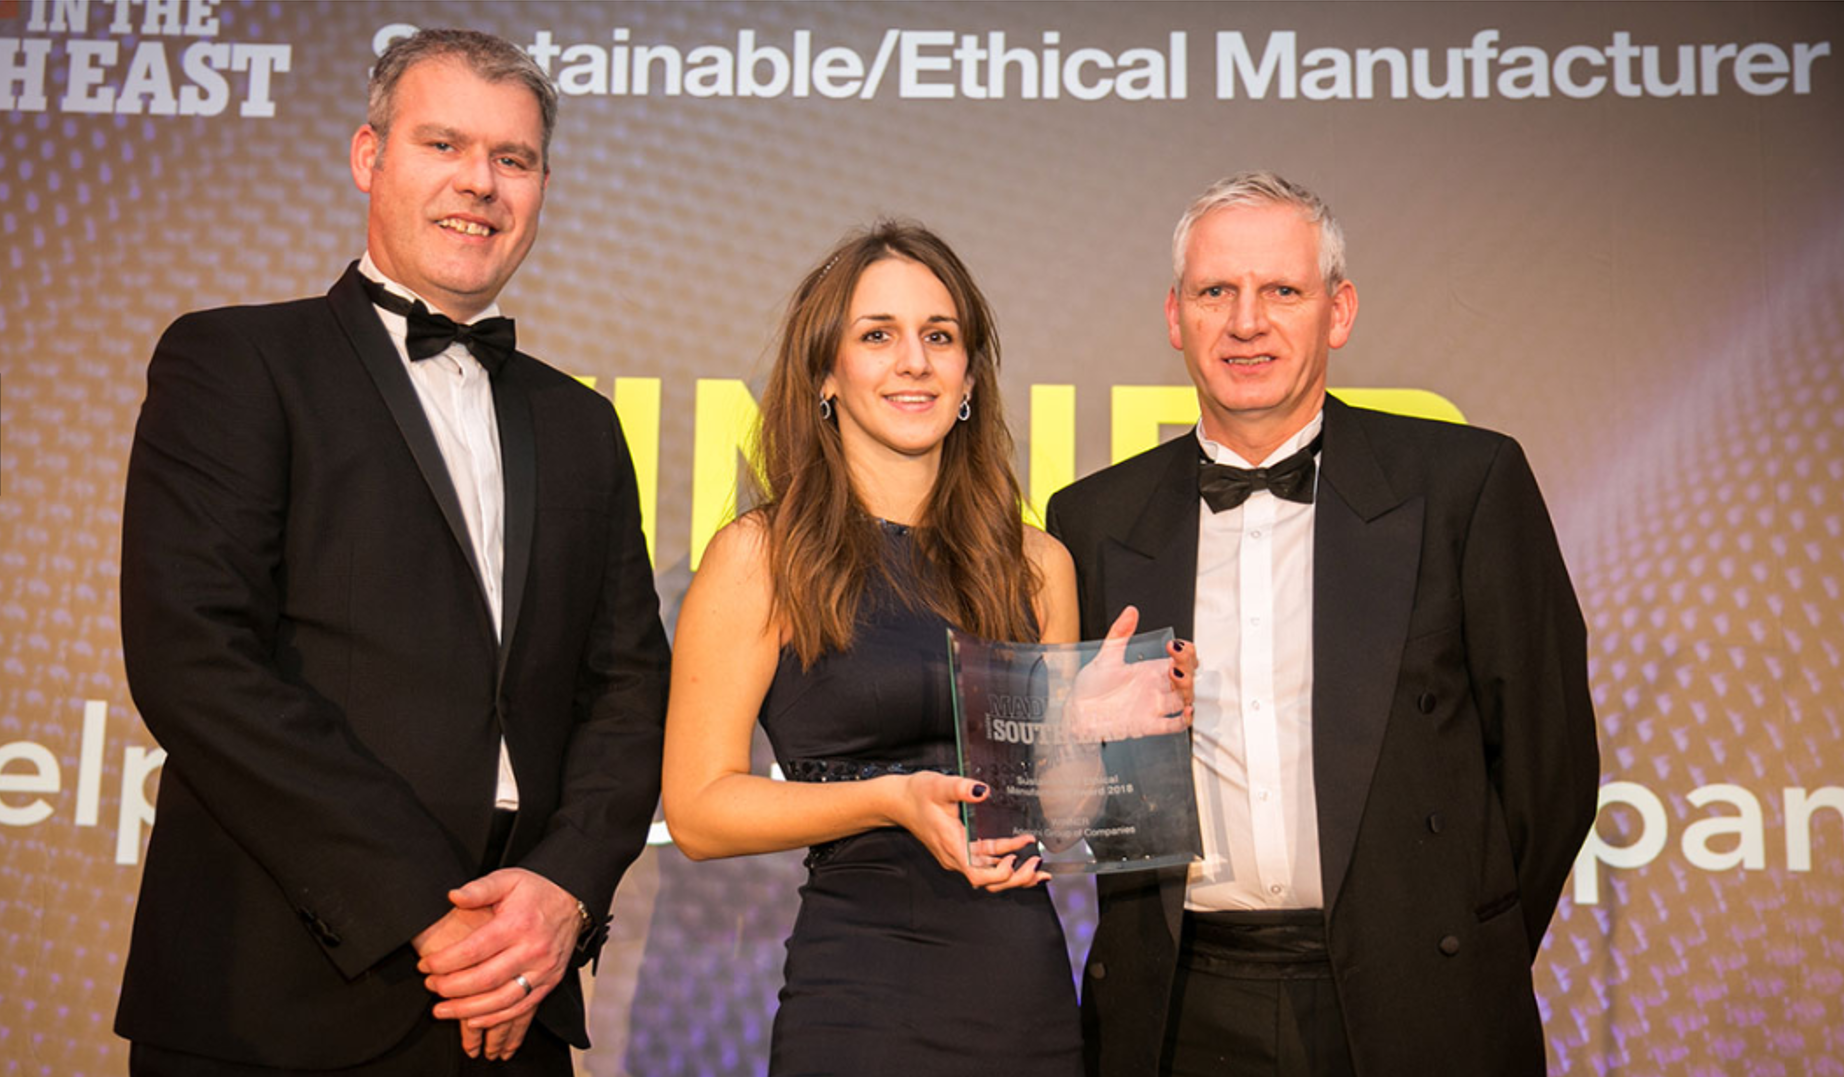 Adelphi win sustainability award for their eco-friendly production facility